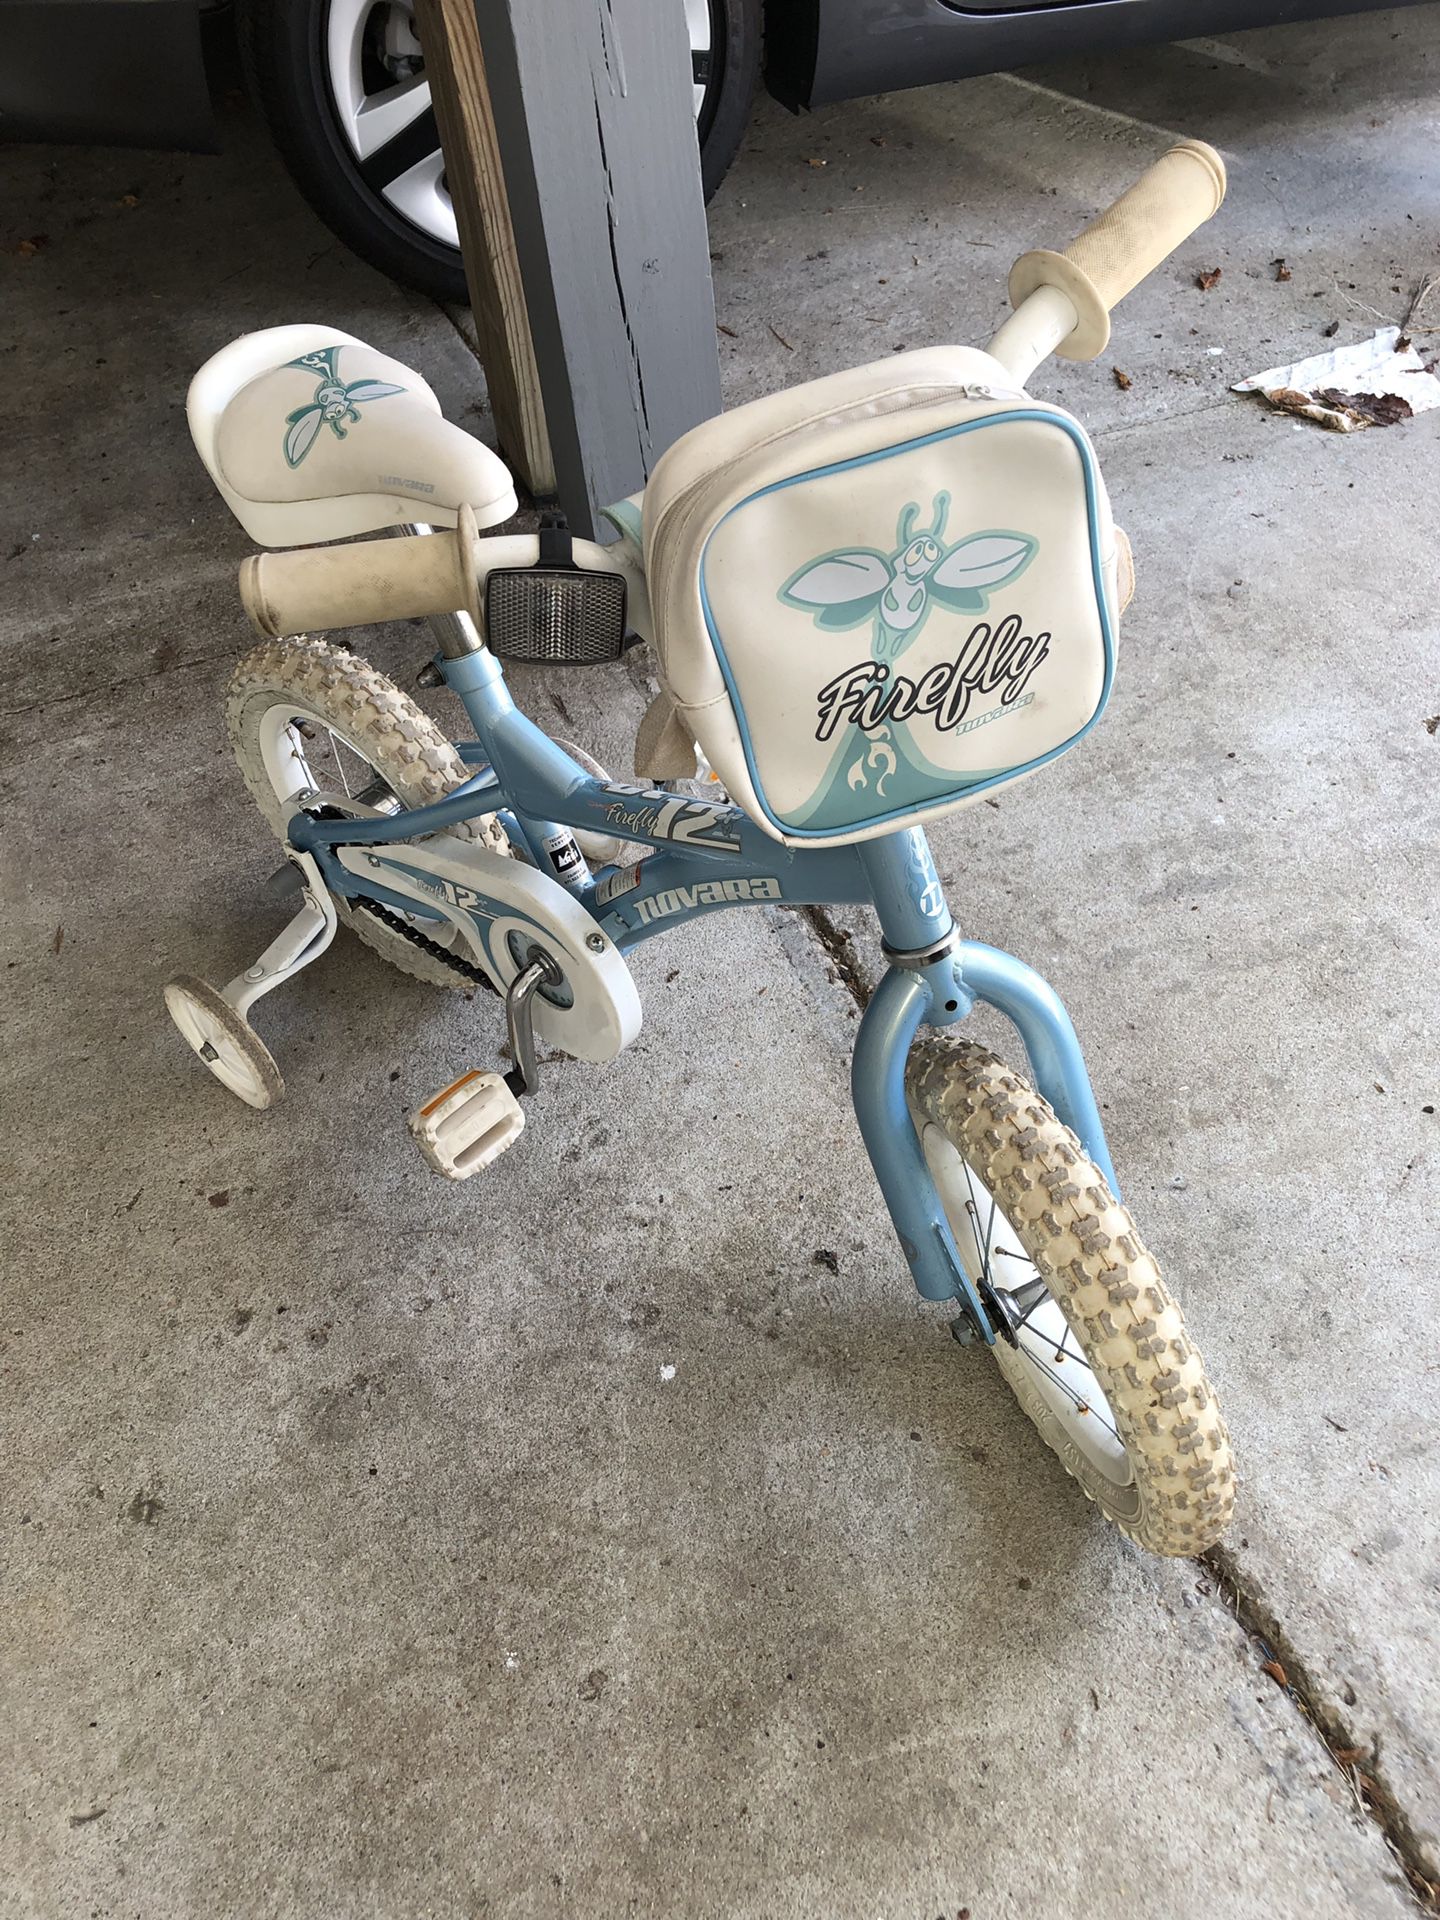 REI Girl’s Bicycle